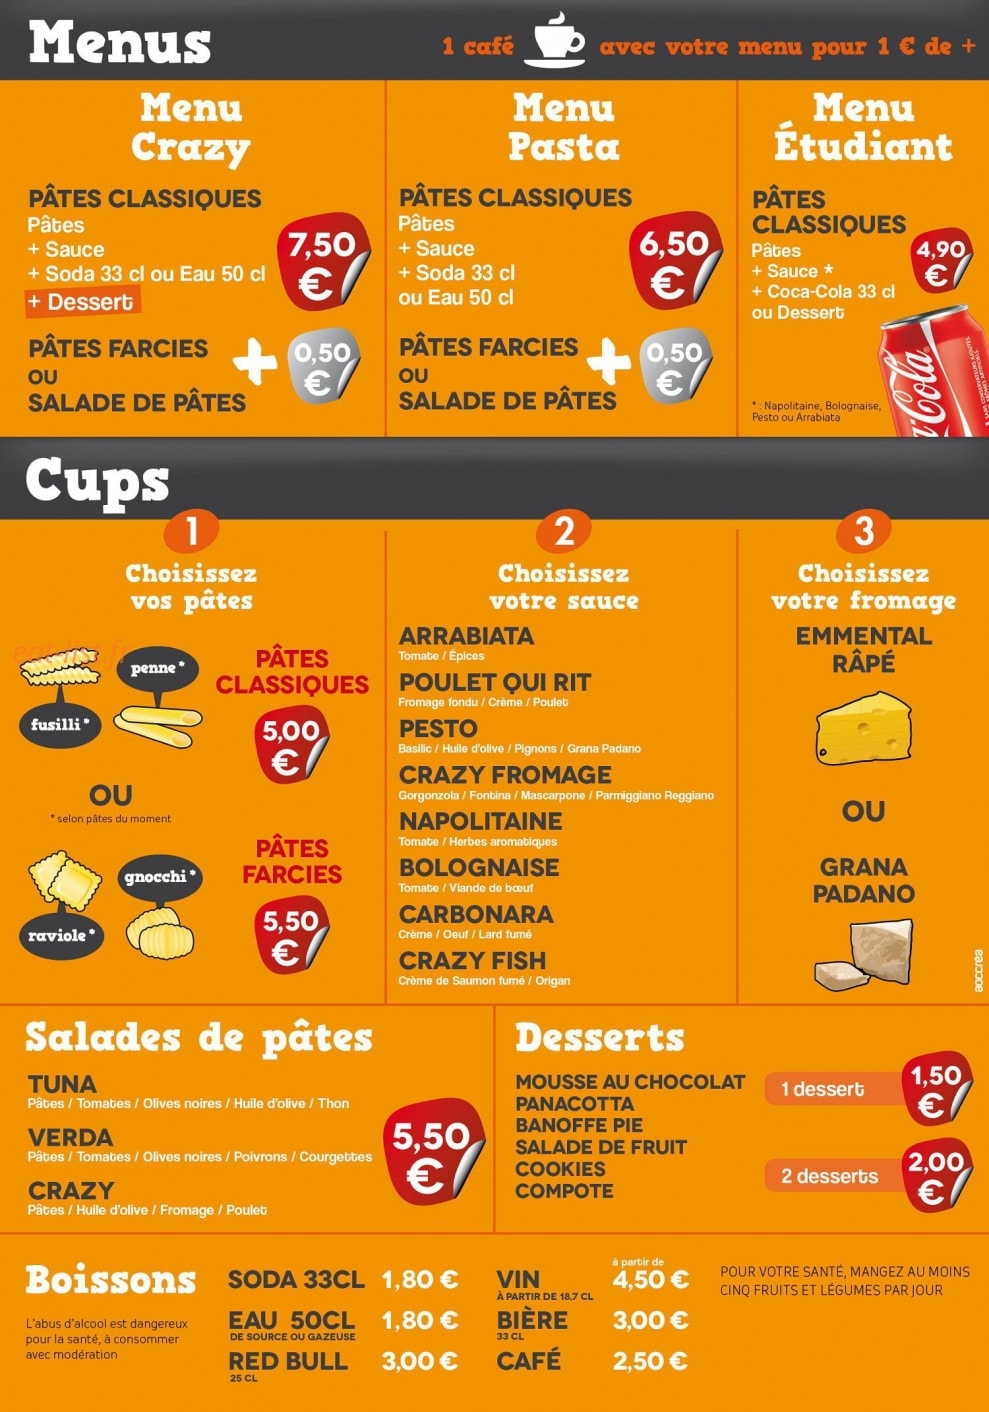 Crazy Pasta à Paris 5 - menu et photos